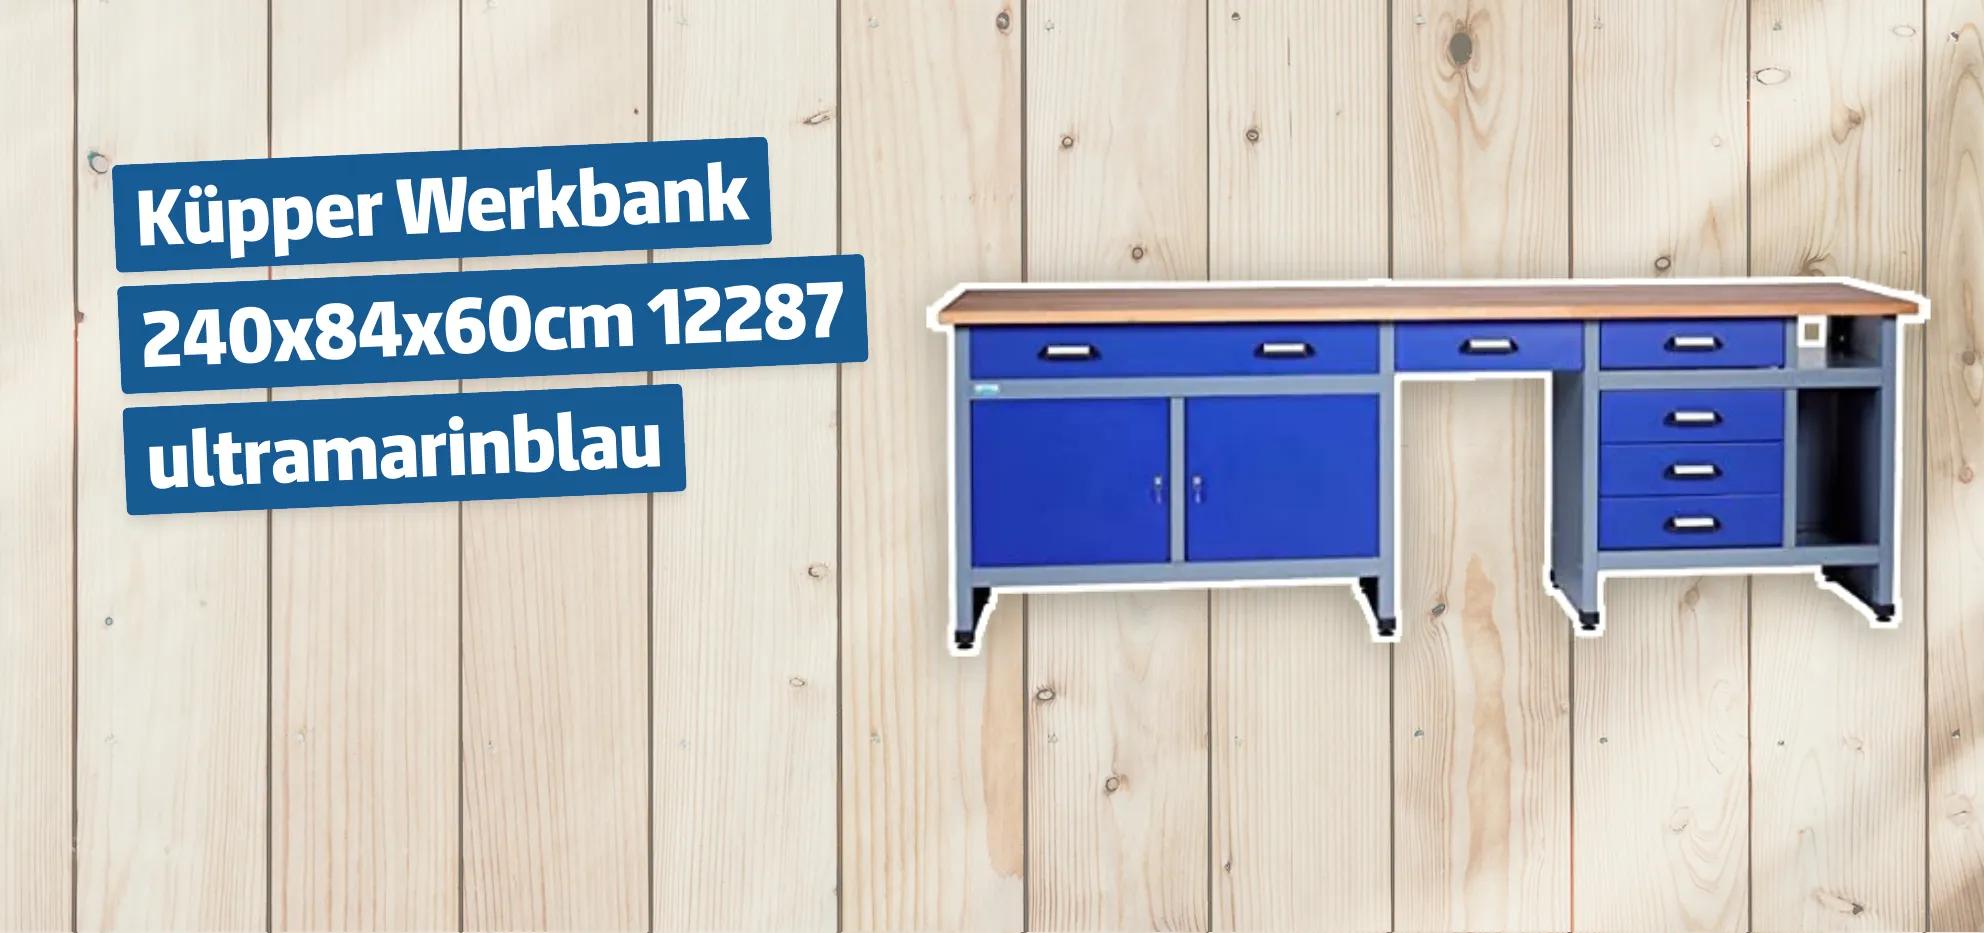 Küpper Werkbank 240x84x60cm 12287 ultramarinblau